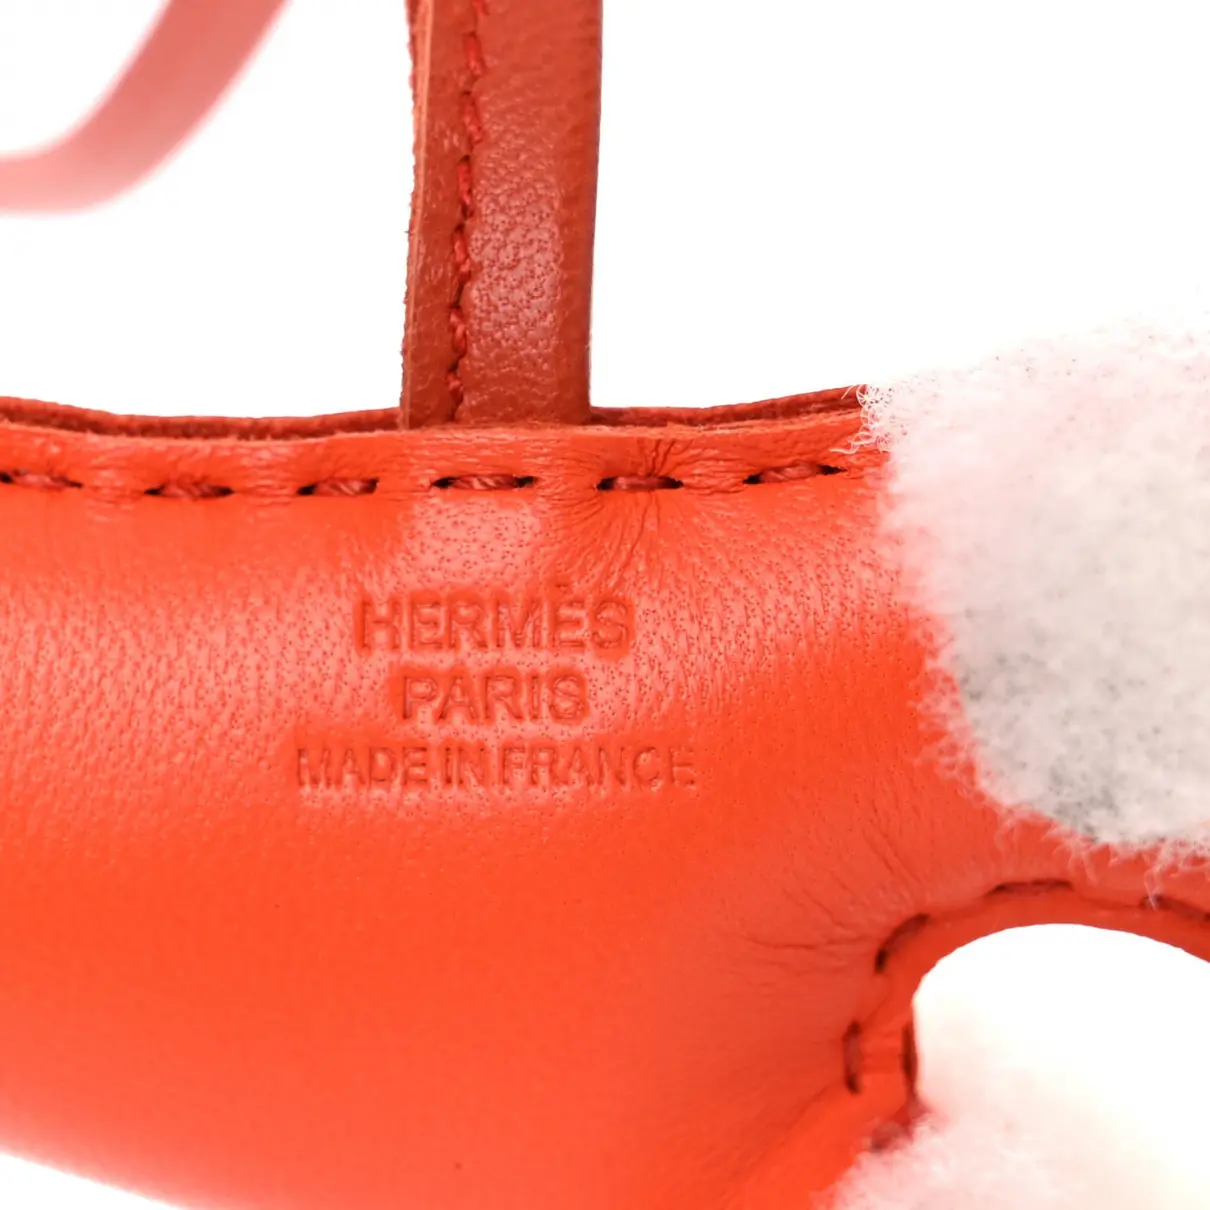 Mini Dog leather bag charm Hermès